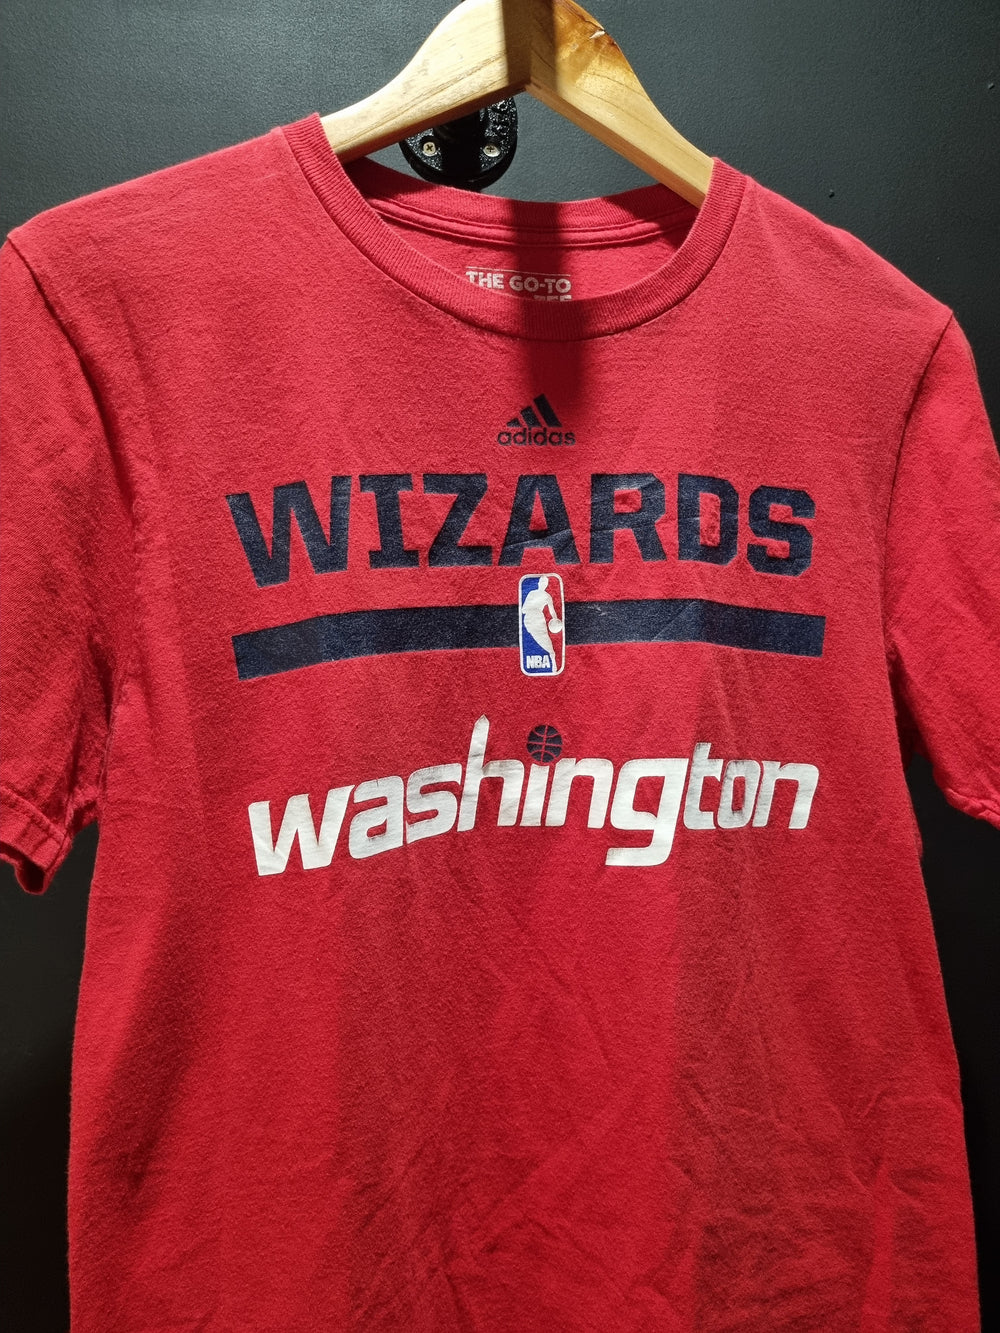 Wizards Washington Adidas Medium